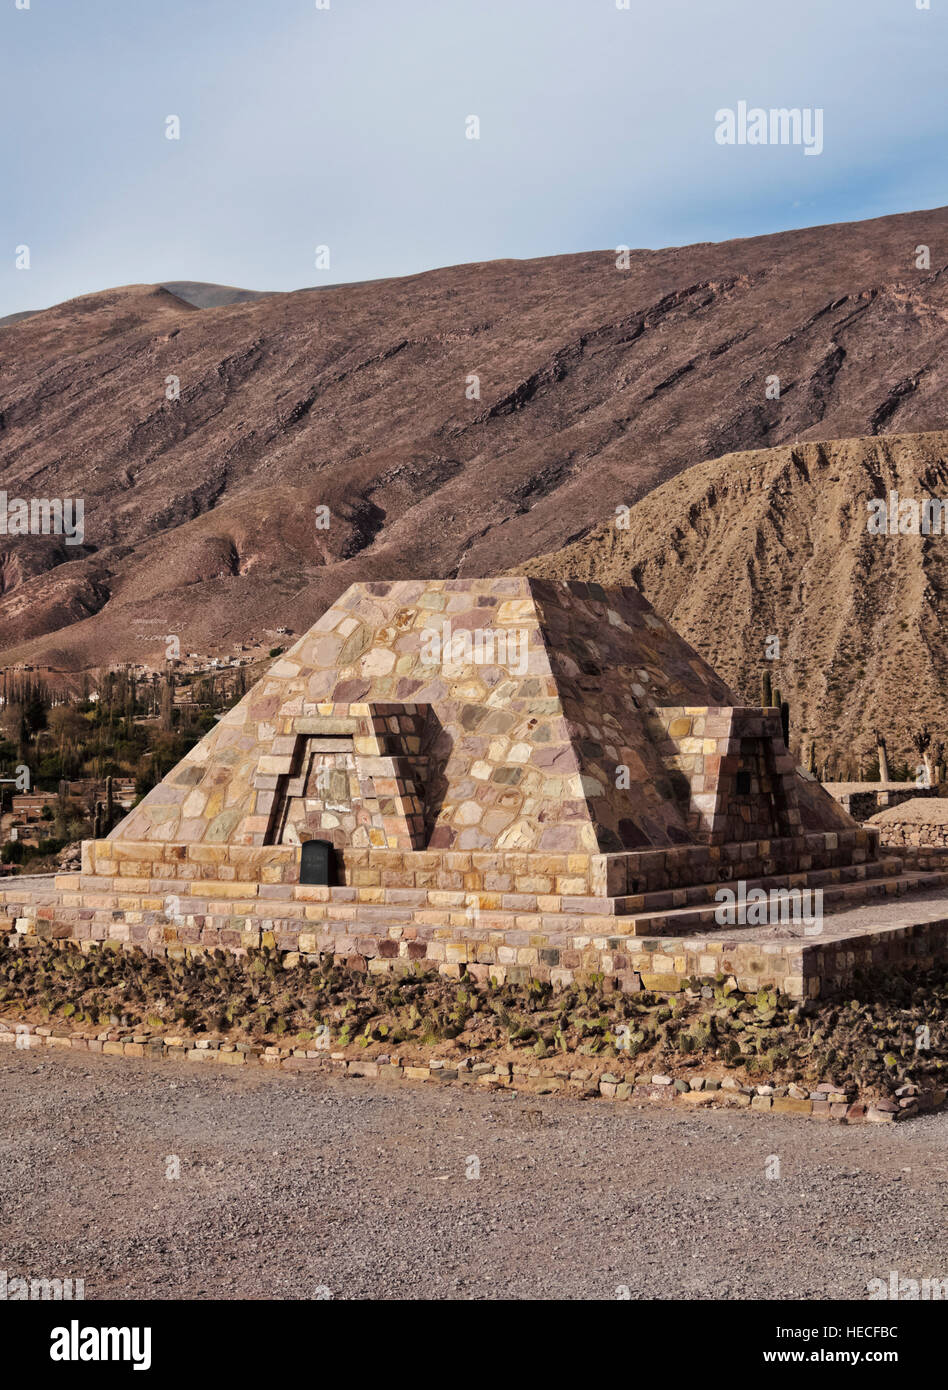 Argentina, Jujuy Province, Tilcara, View of the Pucara de Tilcara, pre-Inca fortification ruins, now museum. Stock Photo